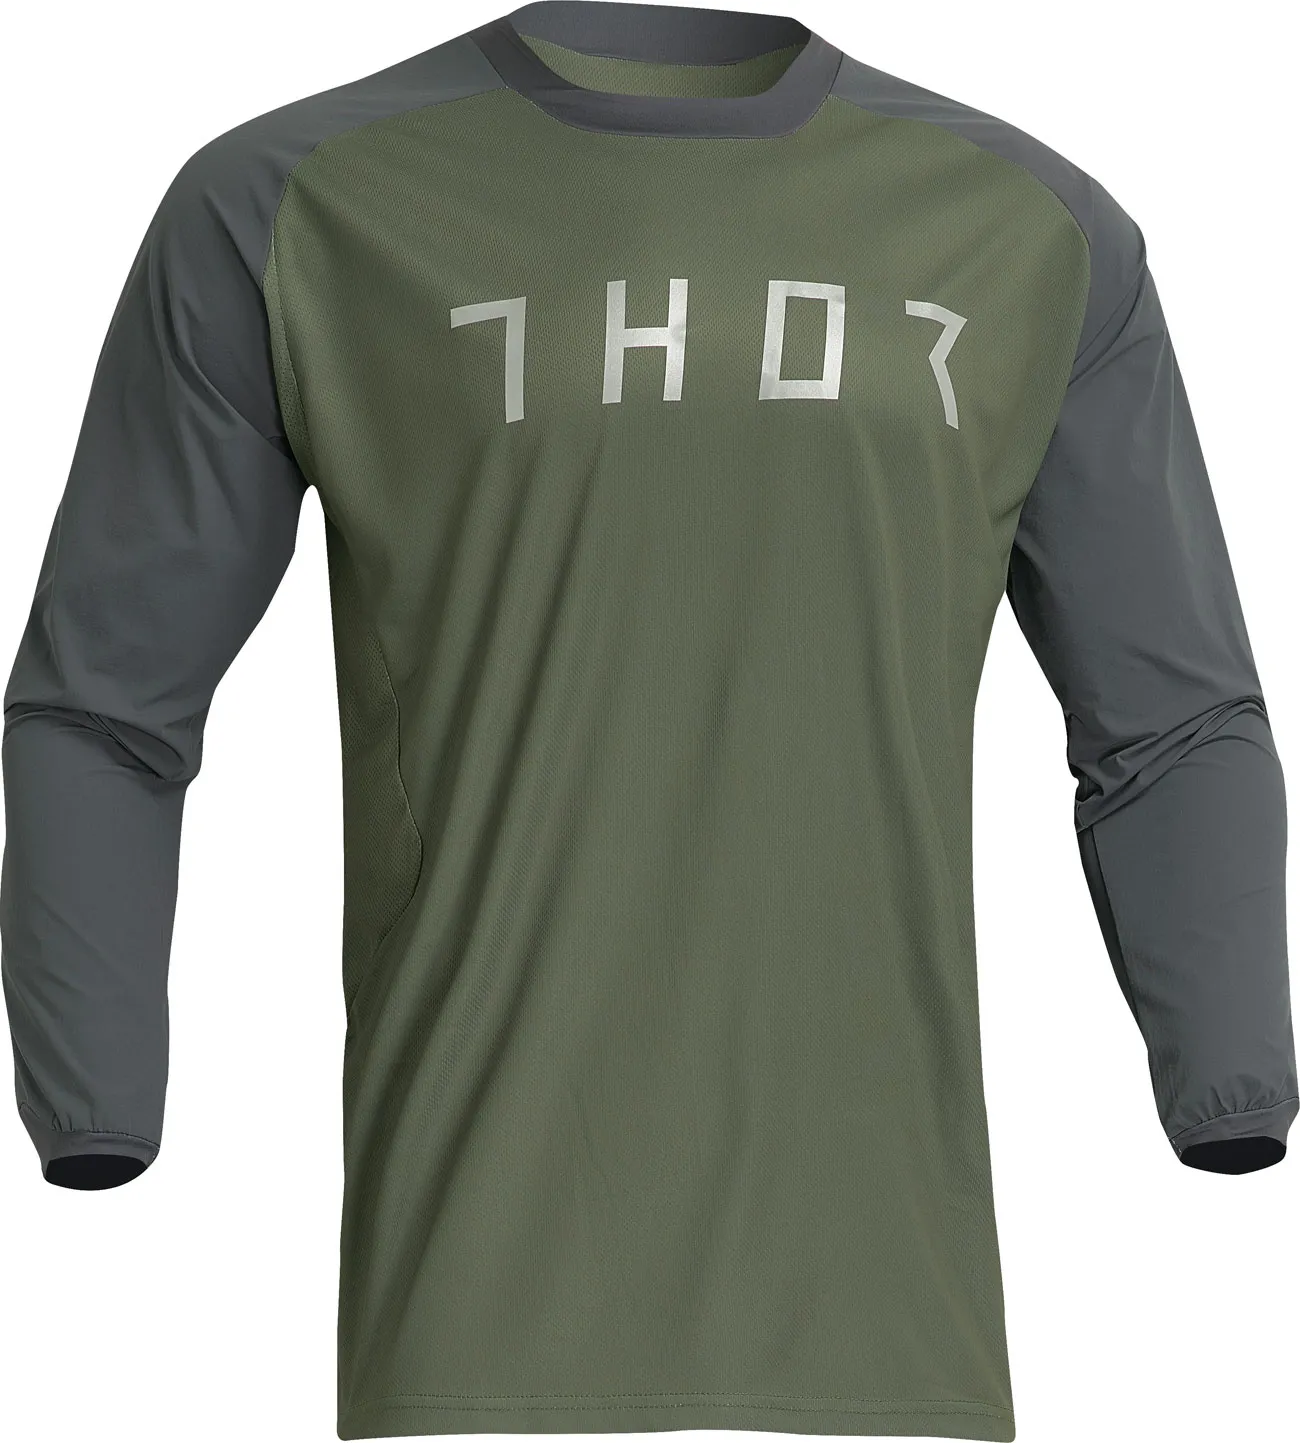 Thor Terrain, jersey - Vert Foncé/Gris Foncé - XXL